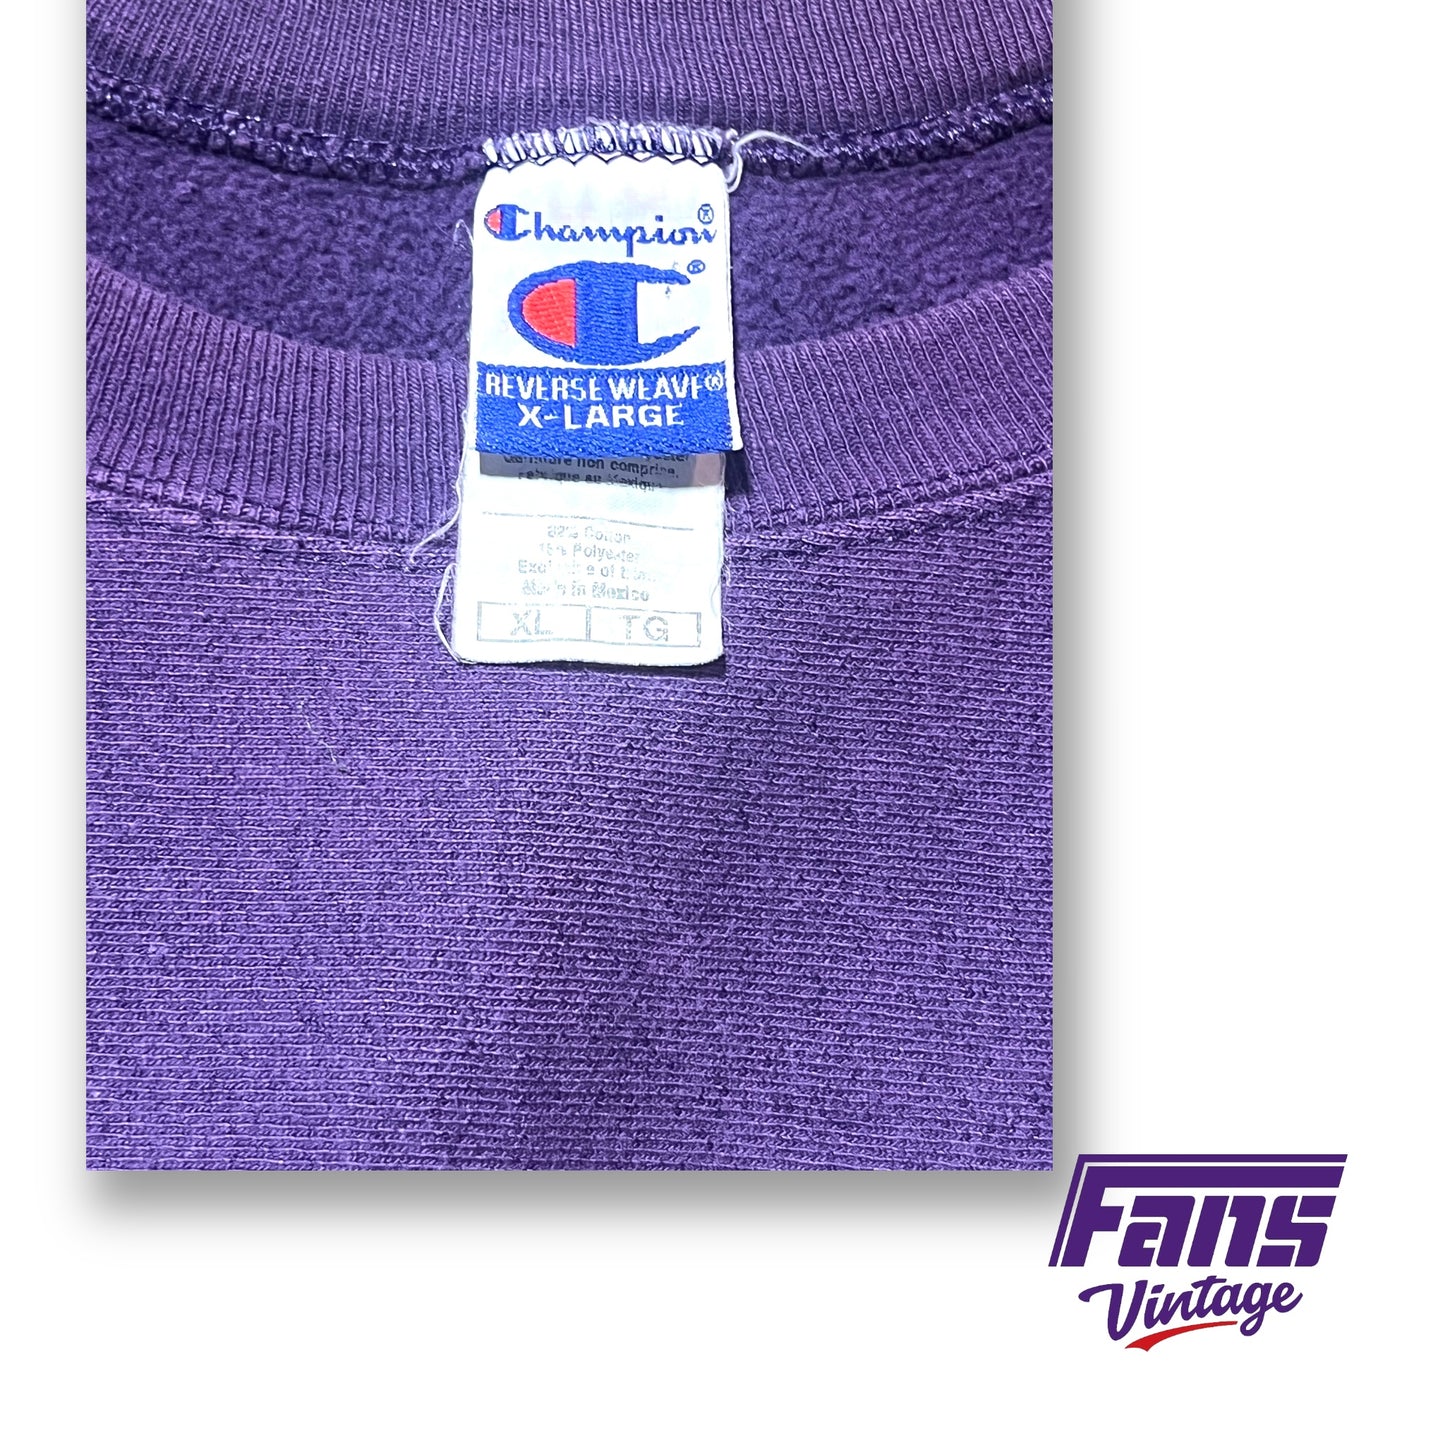 90s Vintage TCU Crewneck Sweater - Purple Champion Reverse Weave with unique embroidery!